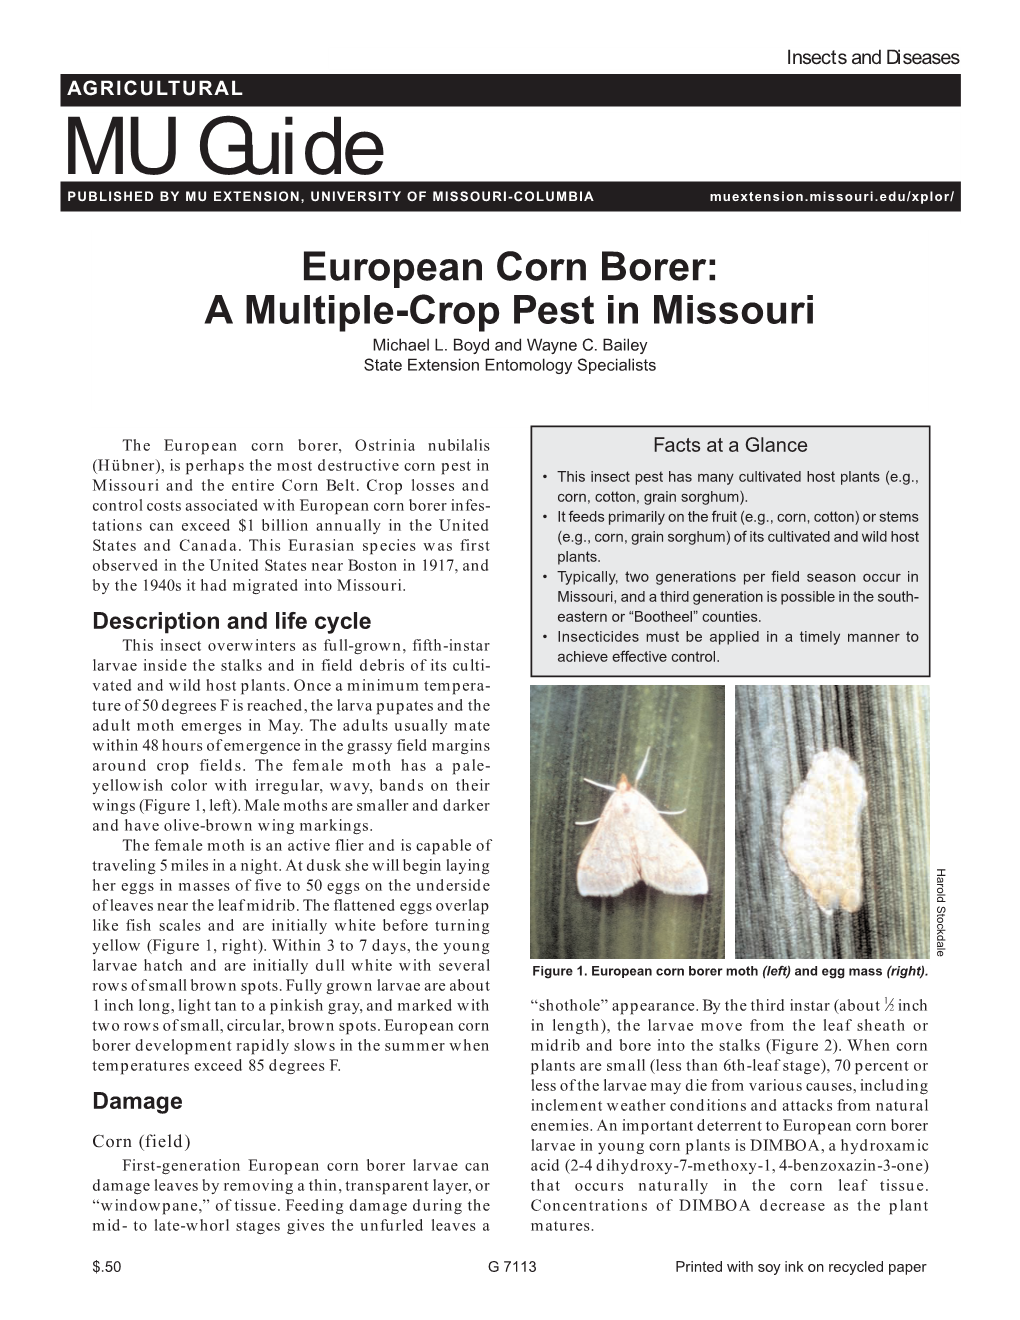 European Corn Borer: a Multiple-Crop Pest in Missouri Michael L